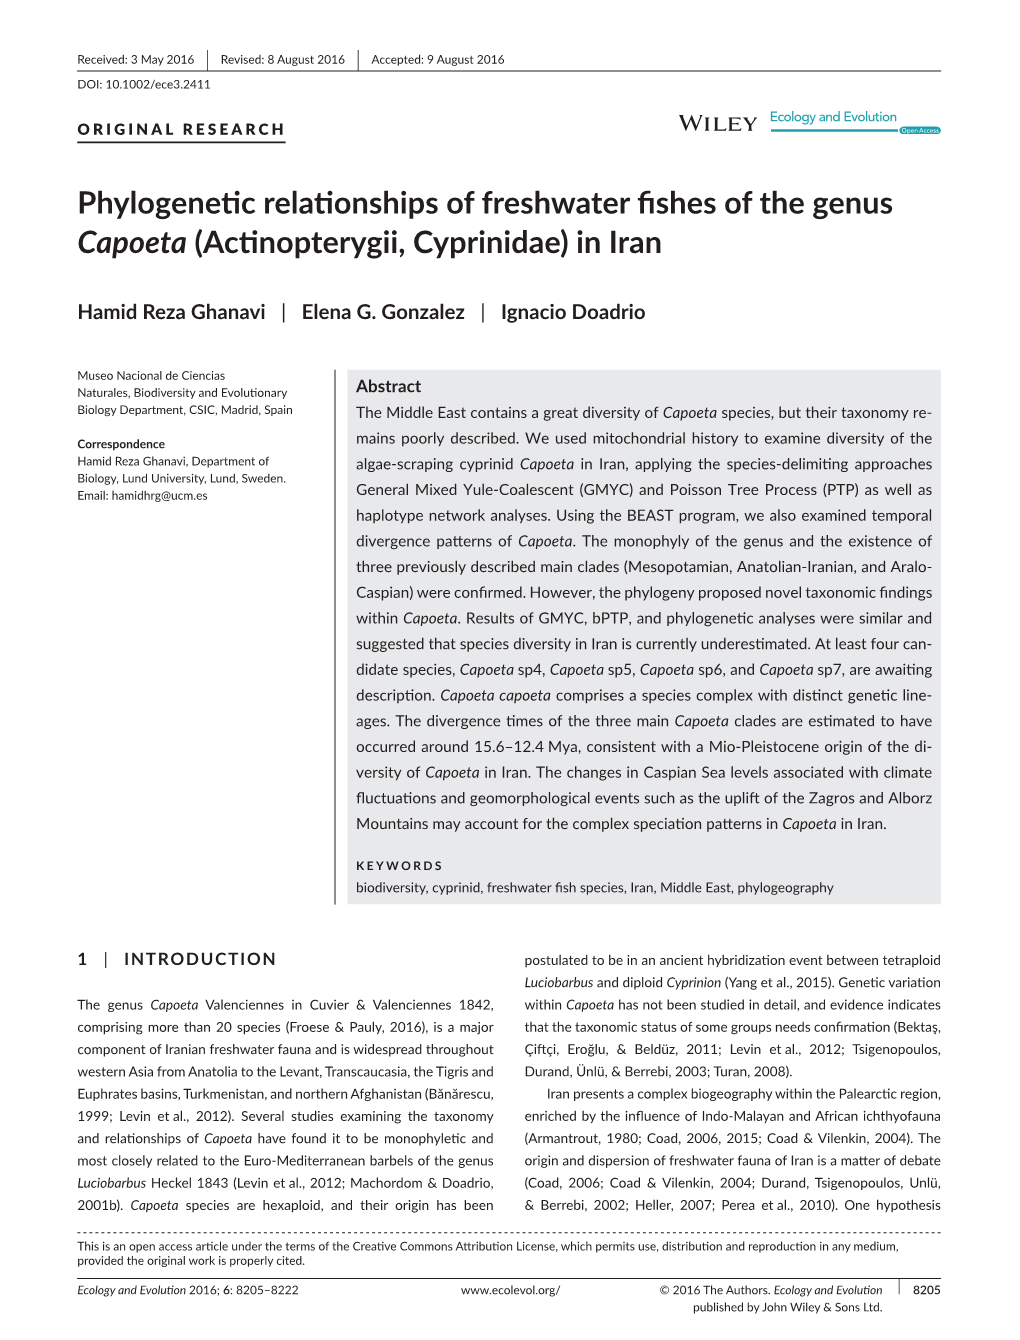 Phylogenetic Relationships of Freshwater Fishes of the Genus Capoeta (Actinopterygii, Cyprinidae) in Iran